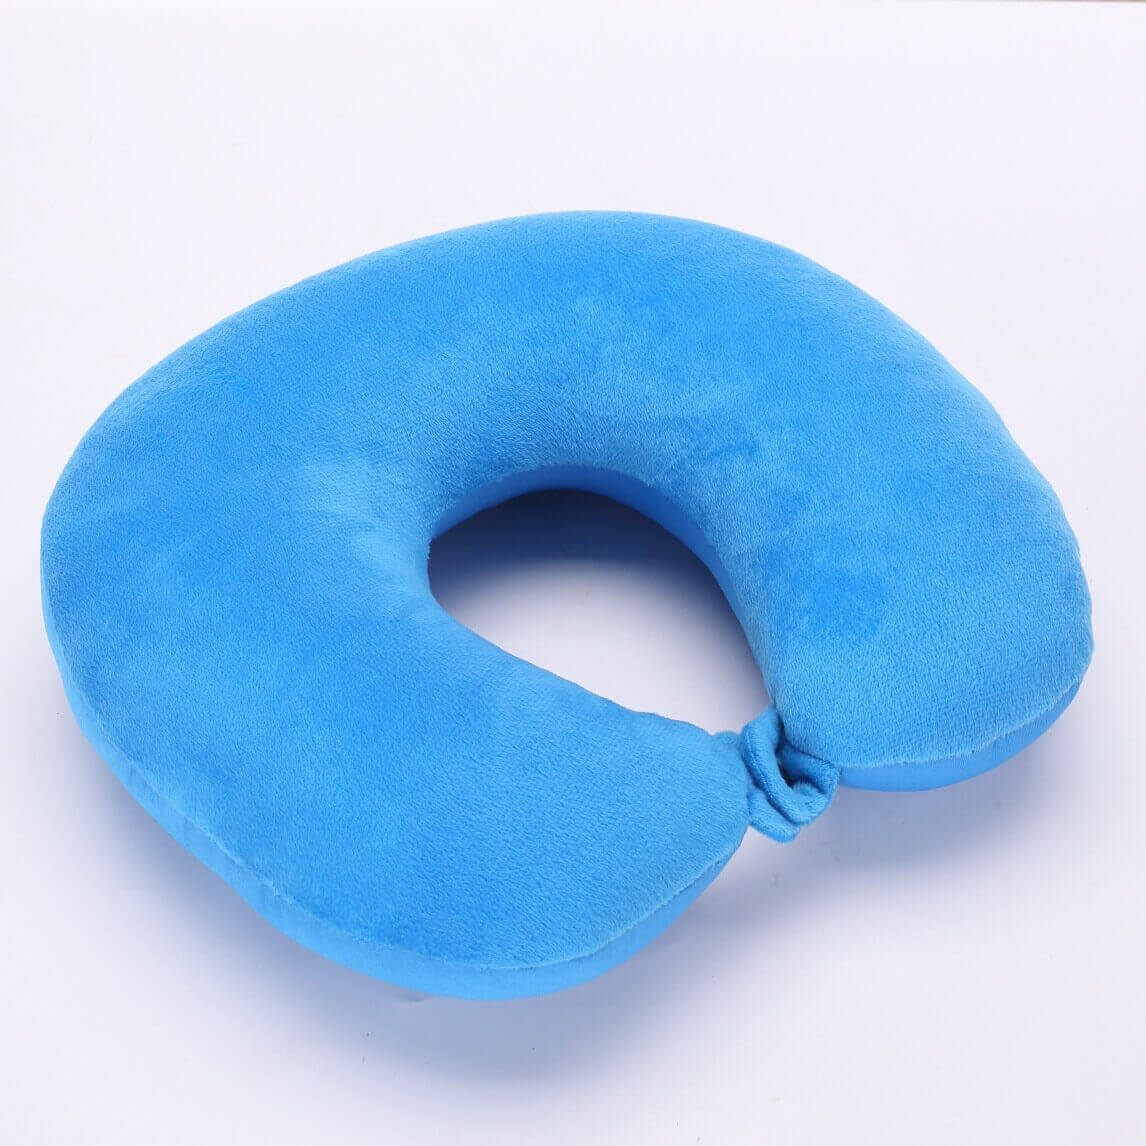 Fanwer memory foam travel pillow, light blue